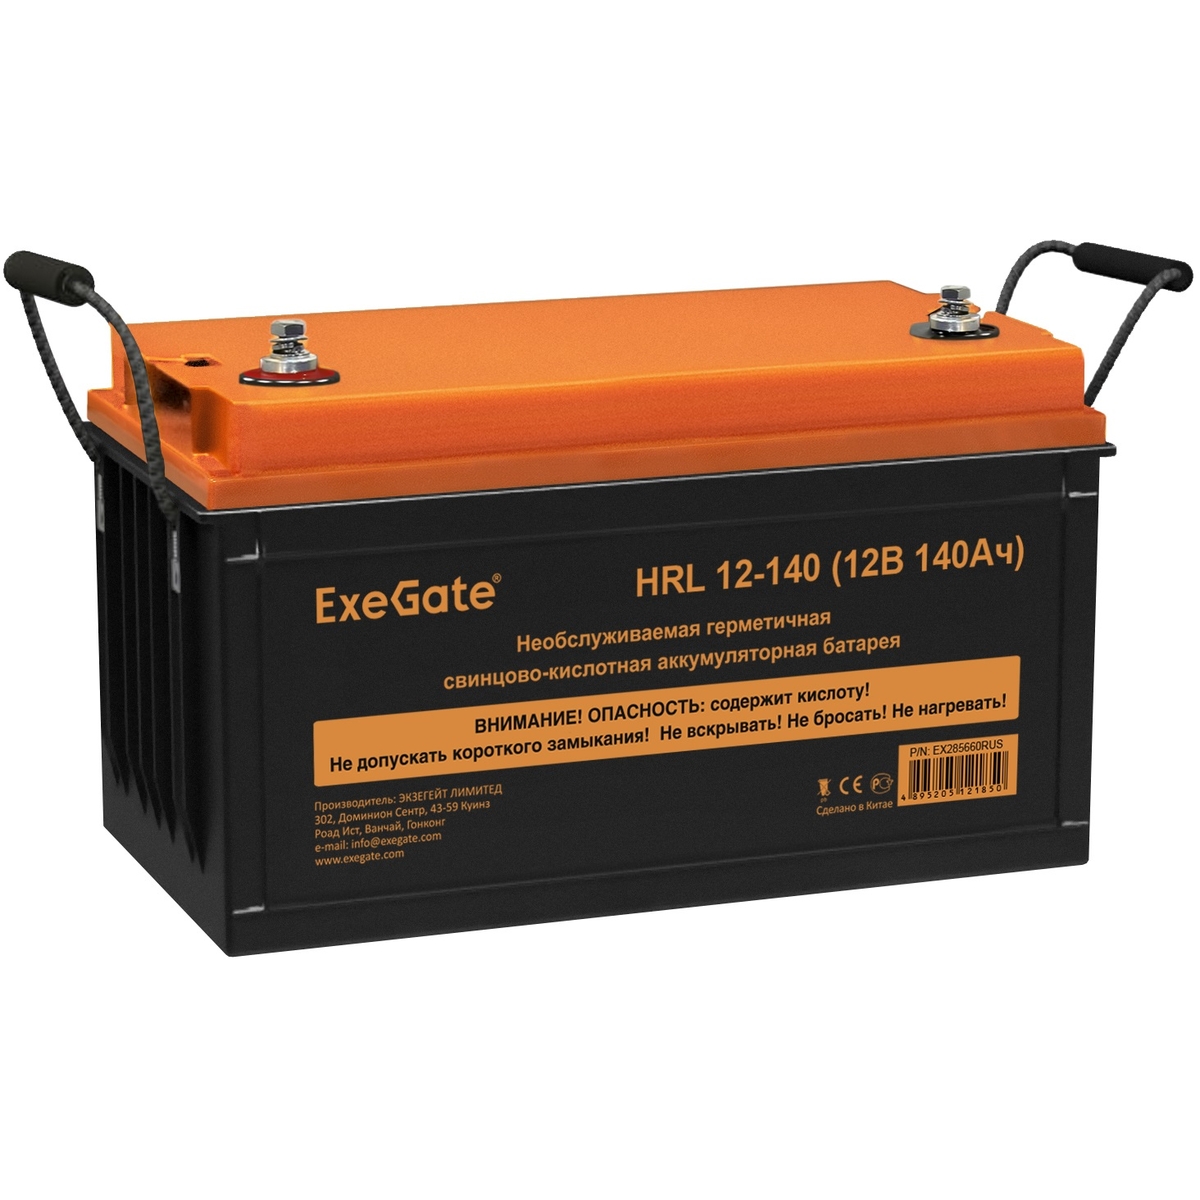 UPS set EX295997 + battery 140Ah EX285660 1 piece